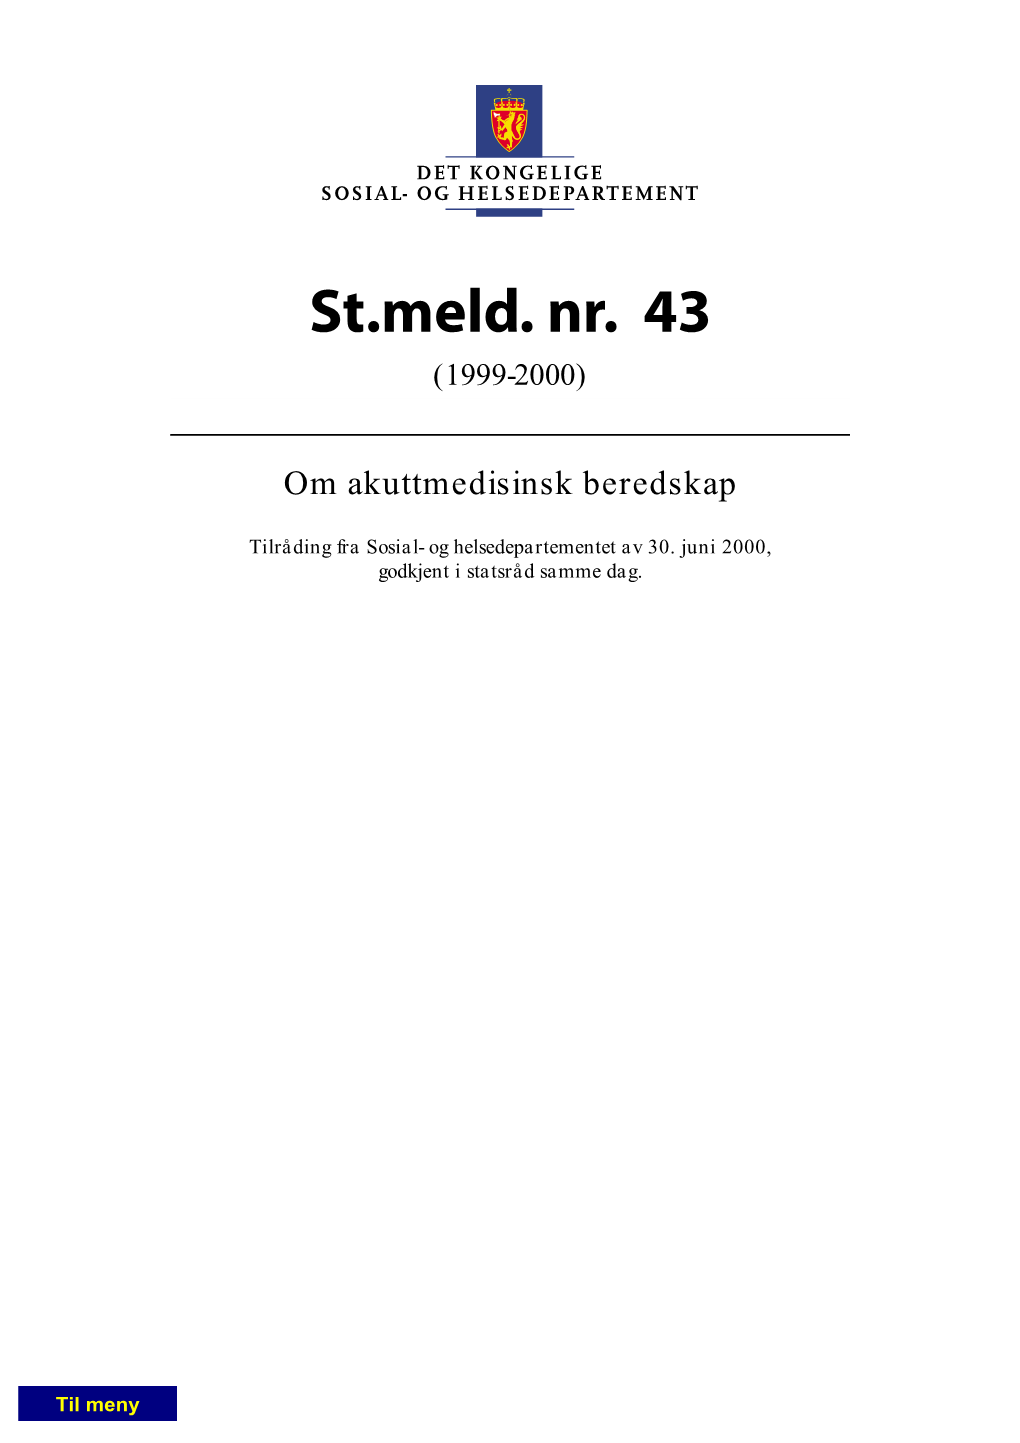 St.Meld. Nr. 43 (1999-2000)